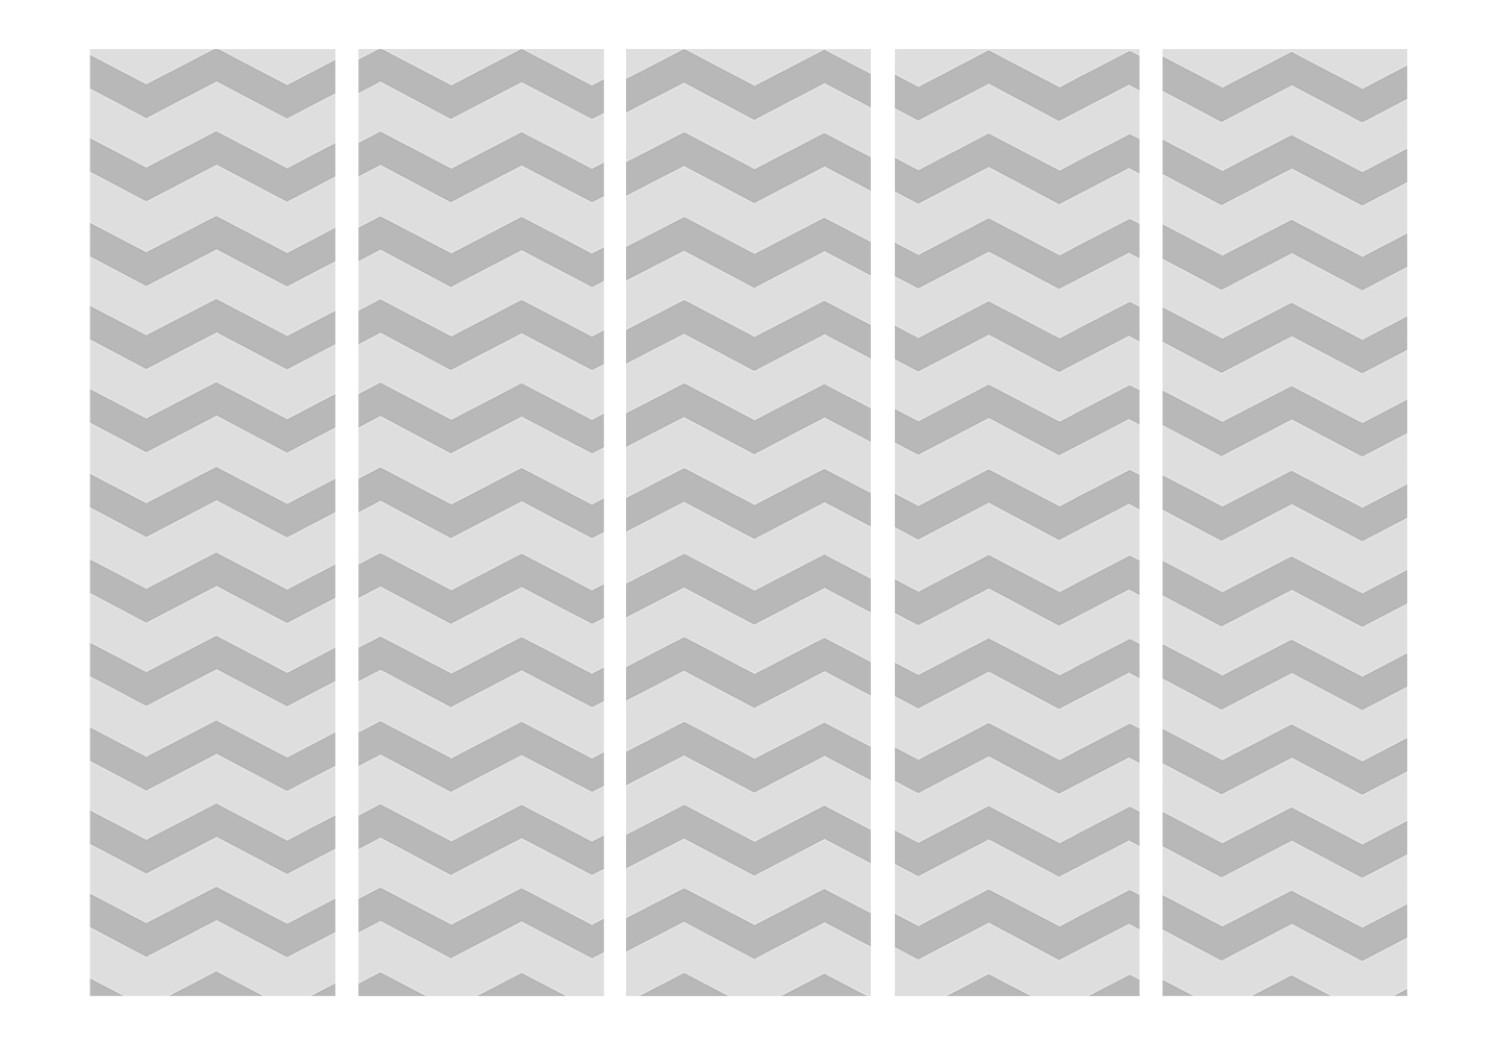 Biombo original Brainwaves II (5 partes) - composición de ondas horizontales grises